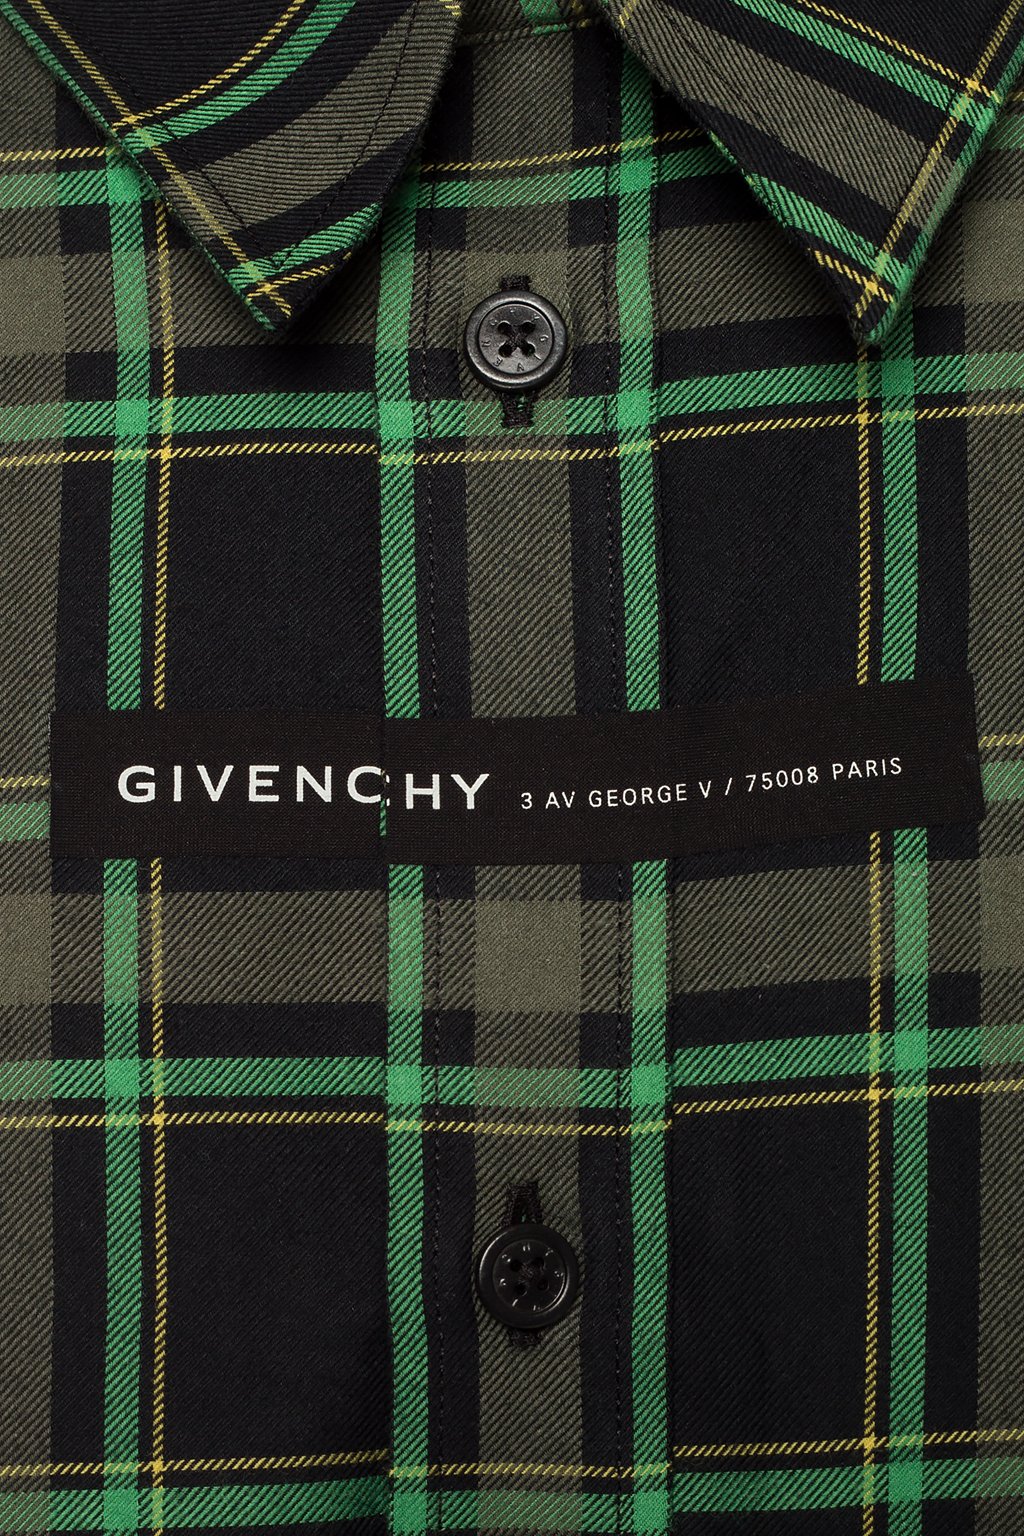 Checked shirt Givenchy - Vitkac Singapore